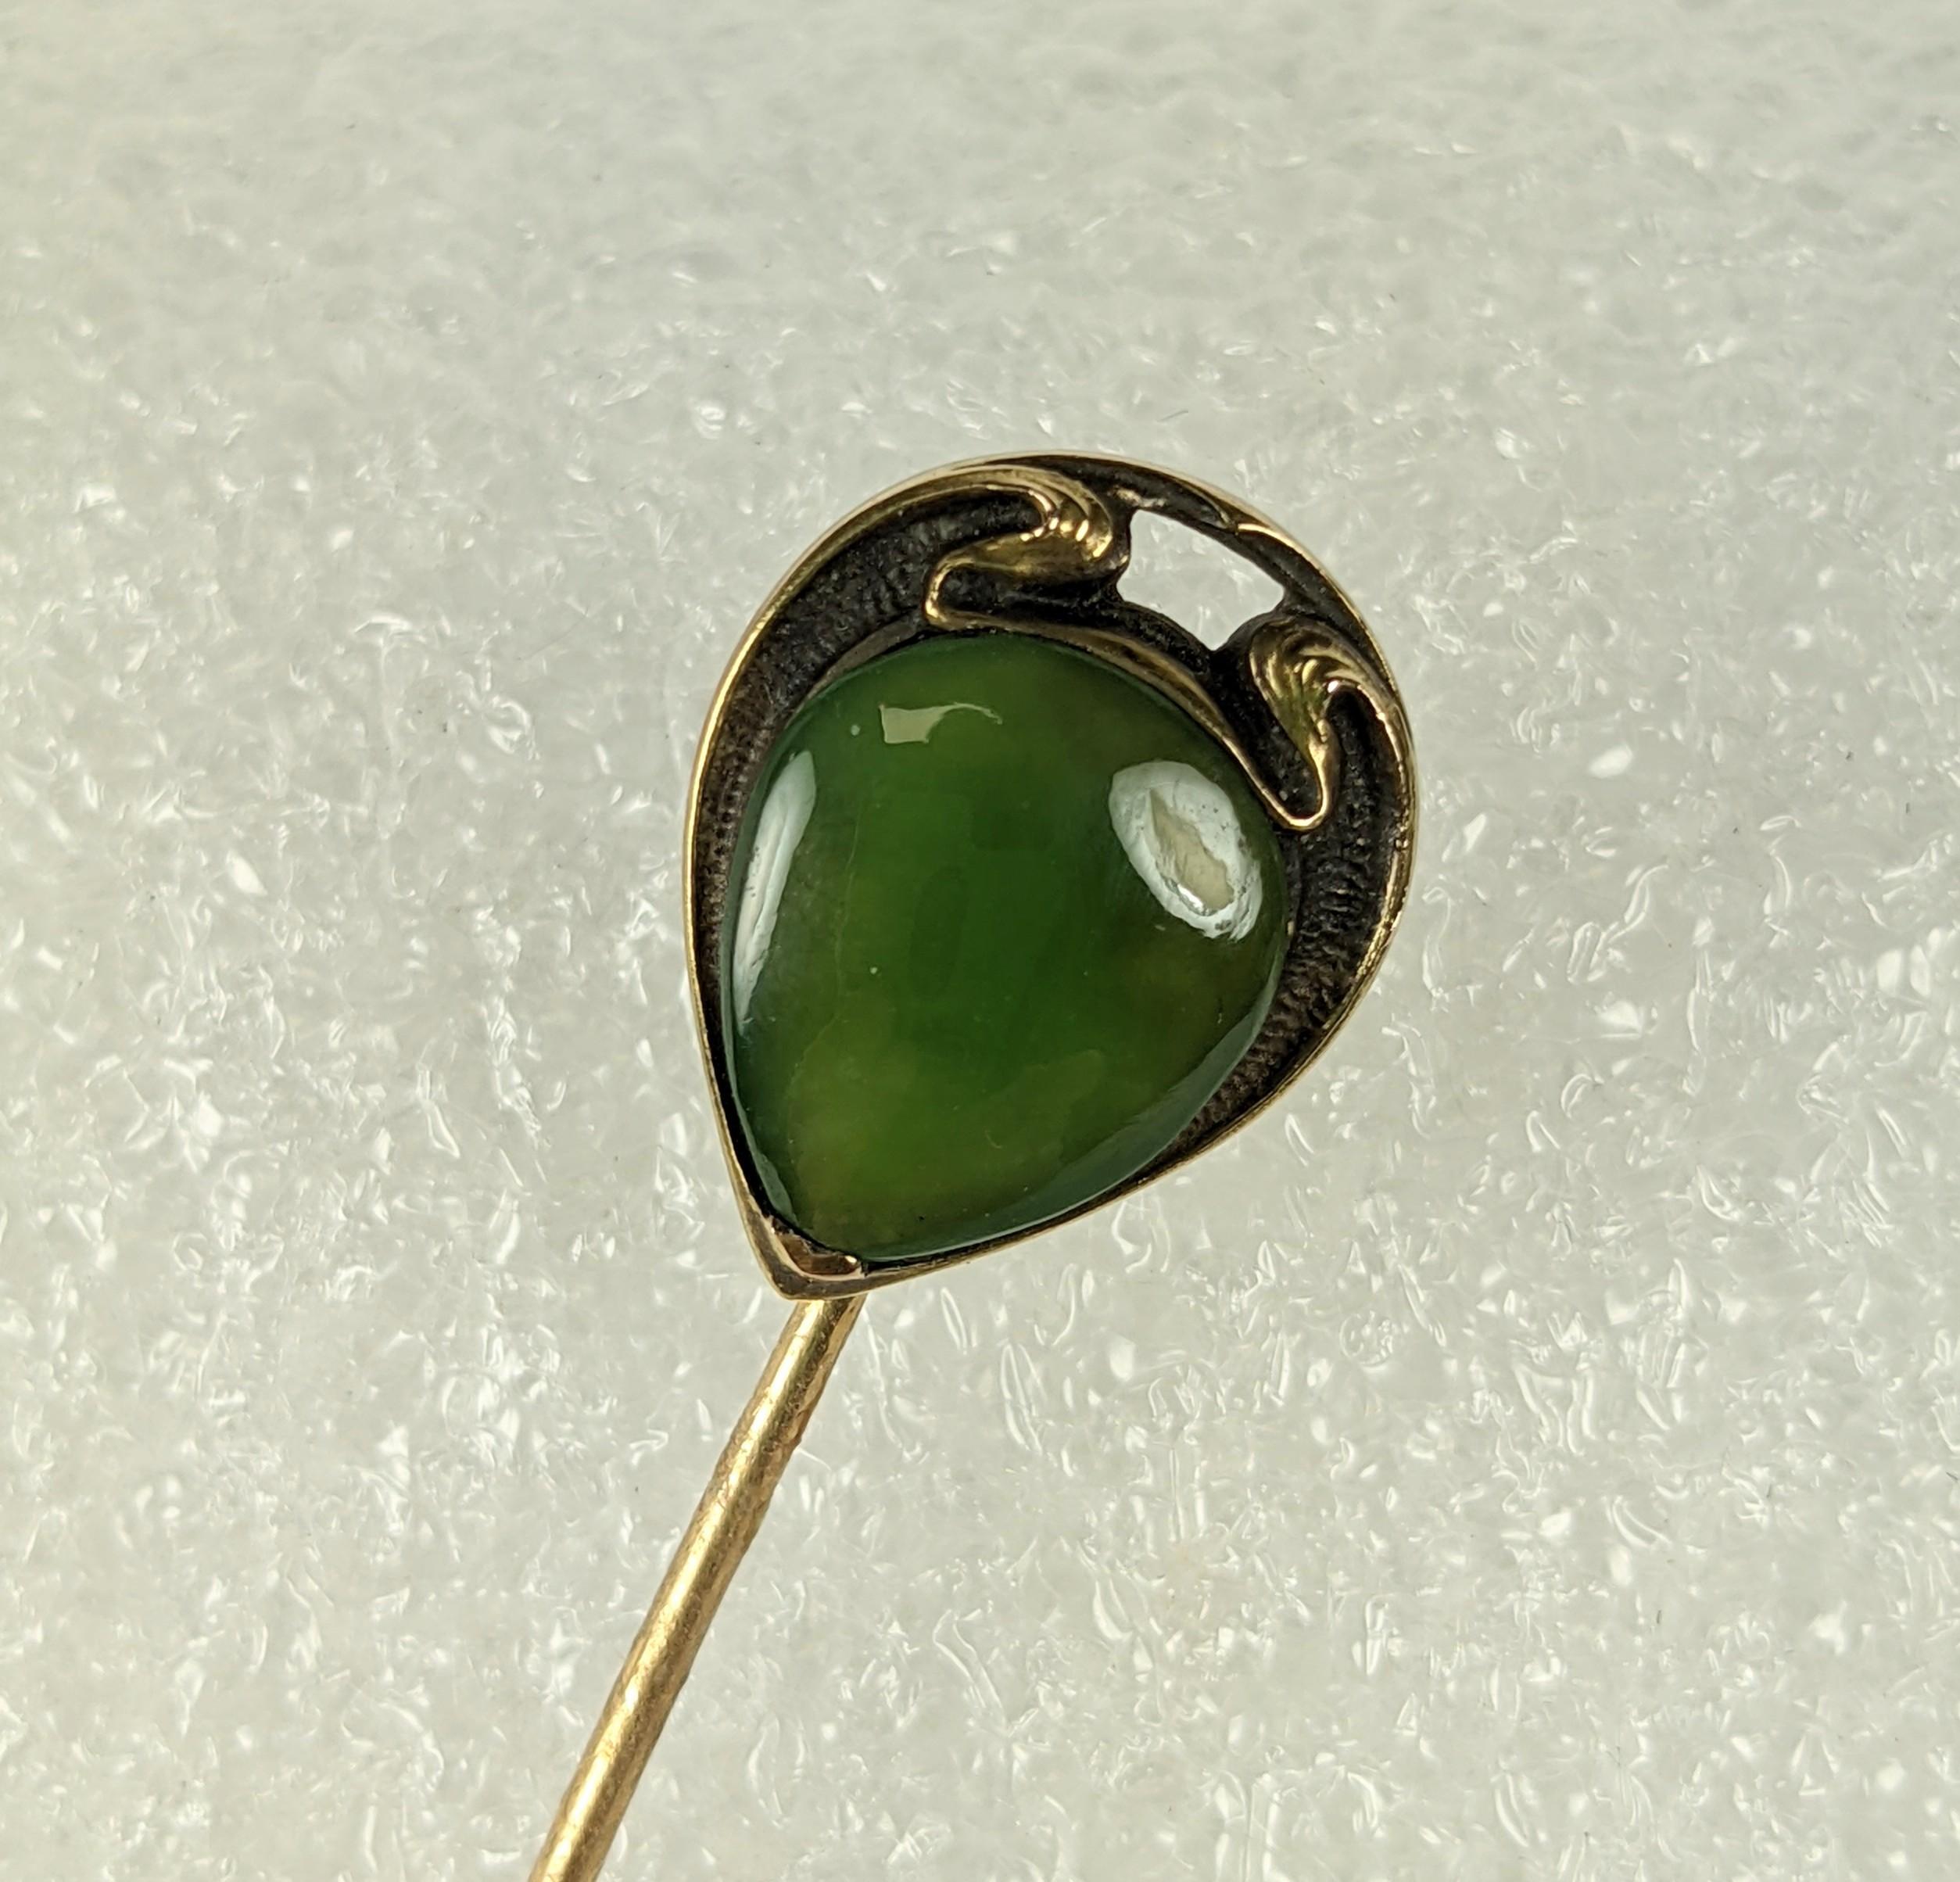 stick pin jewelry